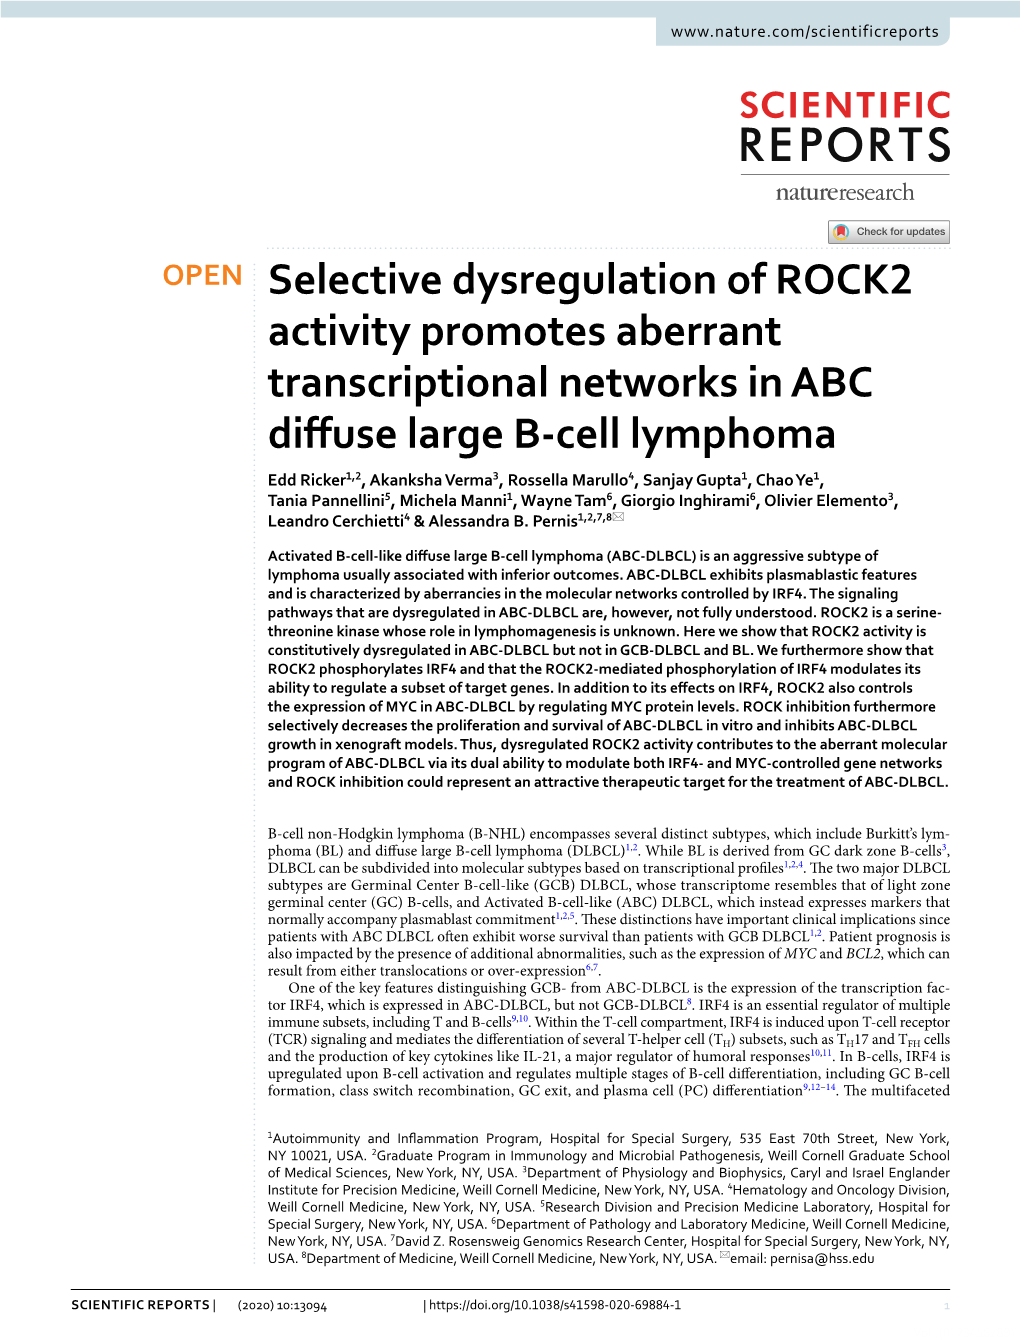 Selective Dysregulation of ROCK2 Activity Promotes Aberrant